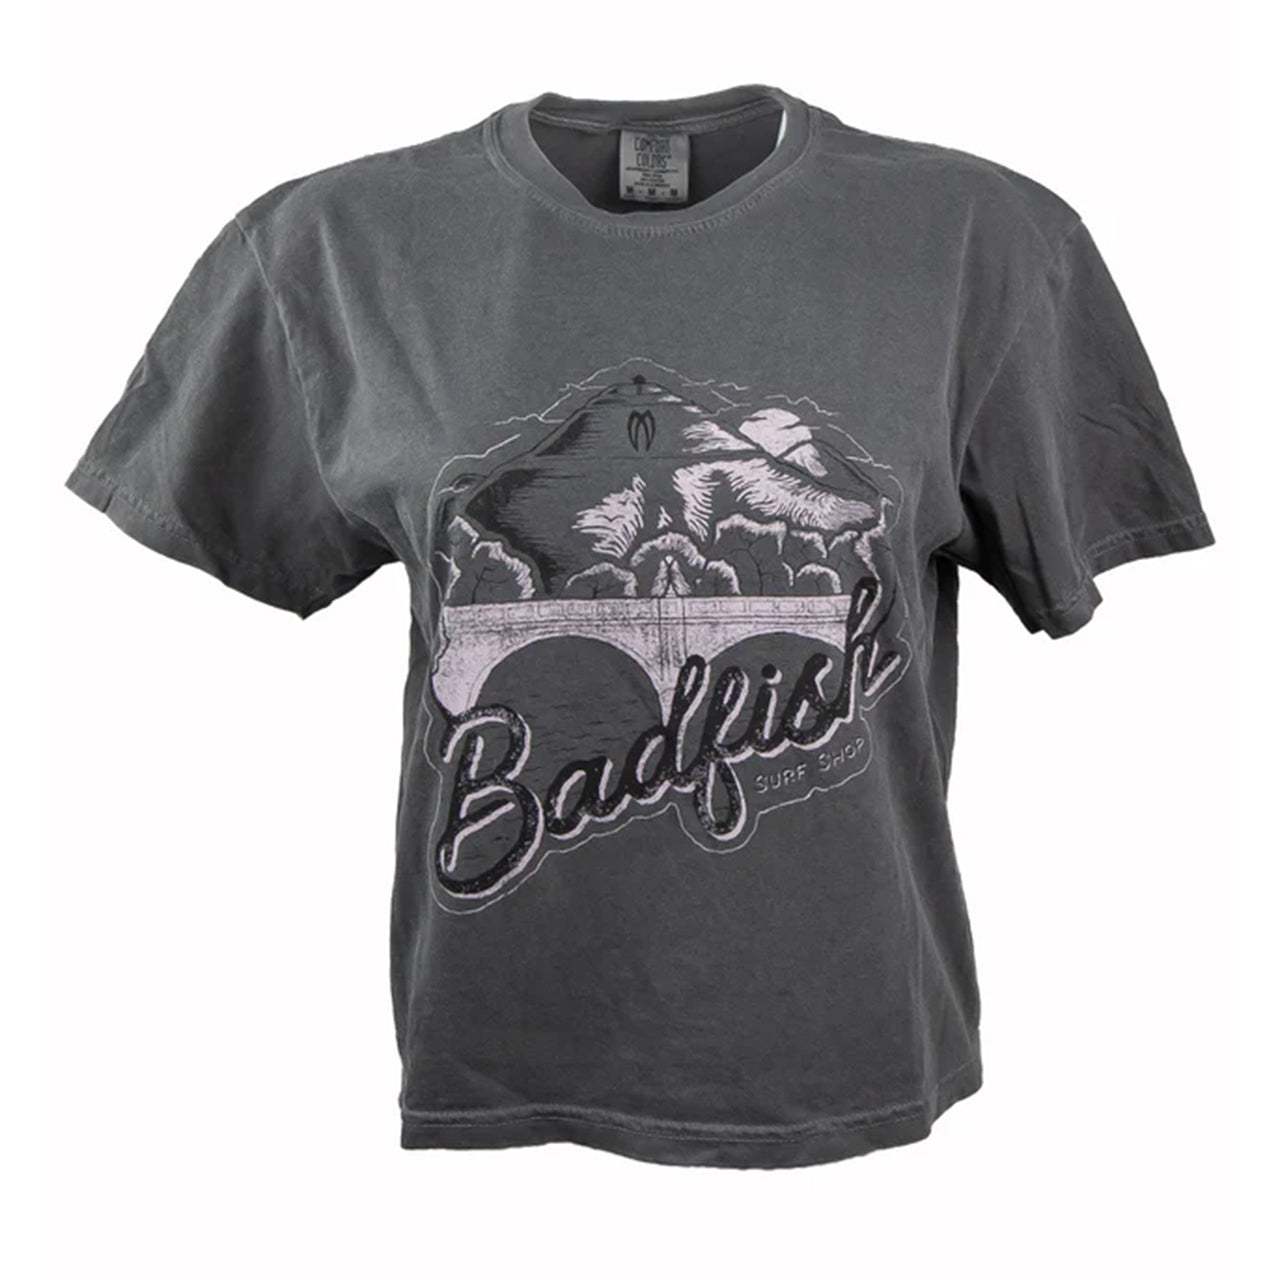 S Mountain/Bridge Boxy Crew T-Shirt